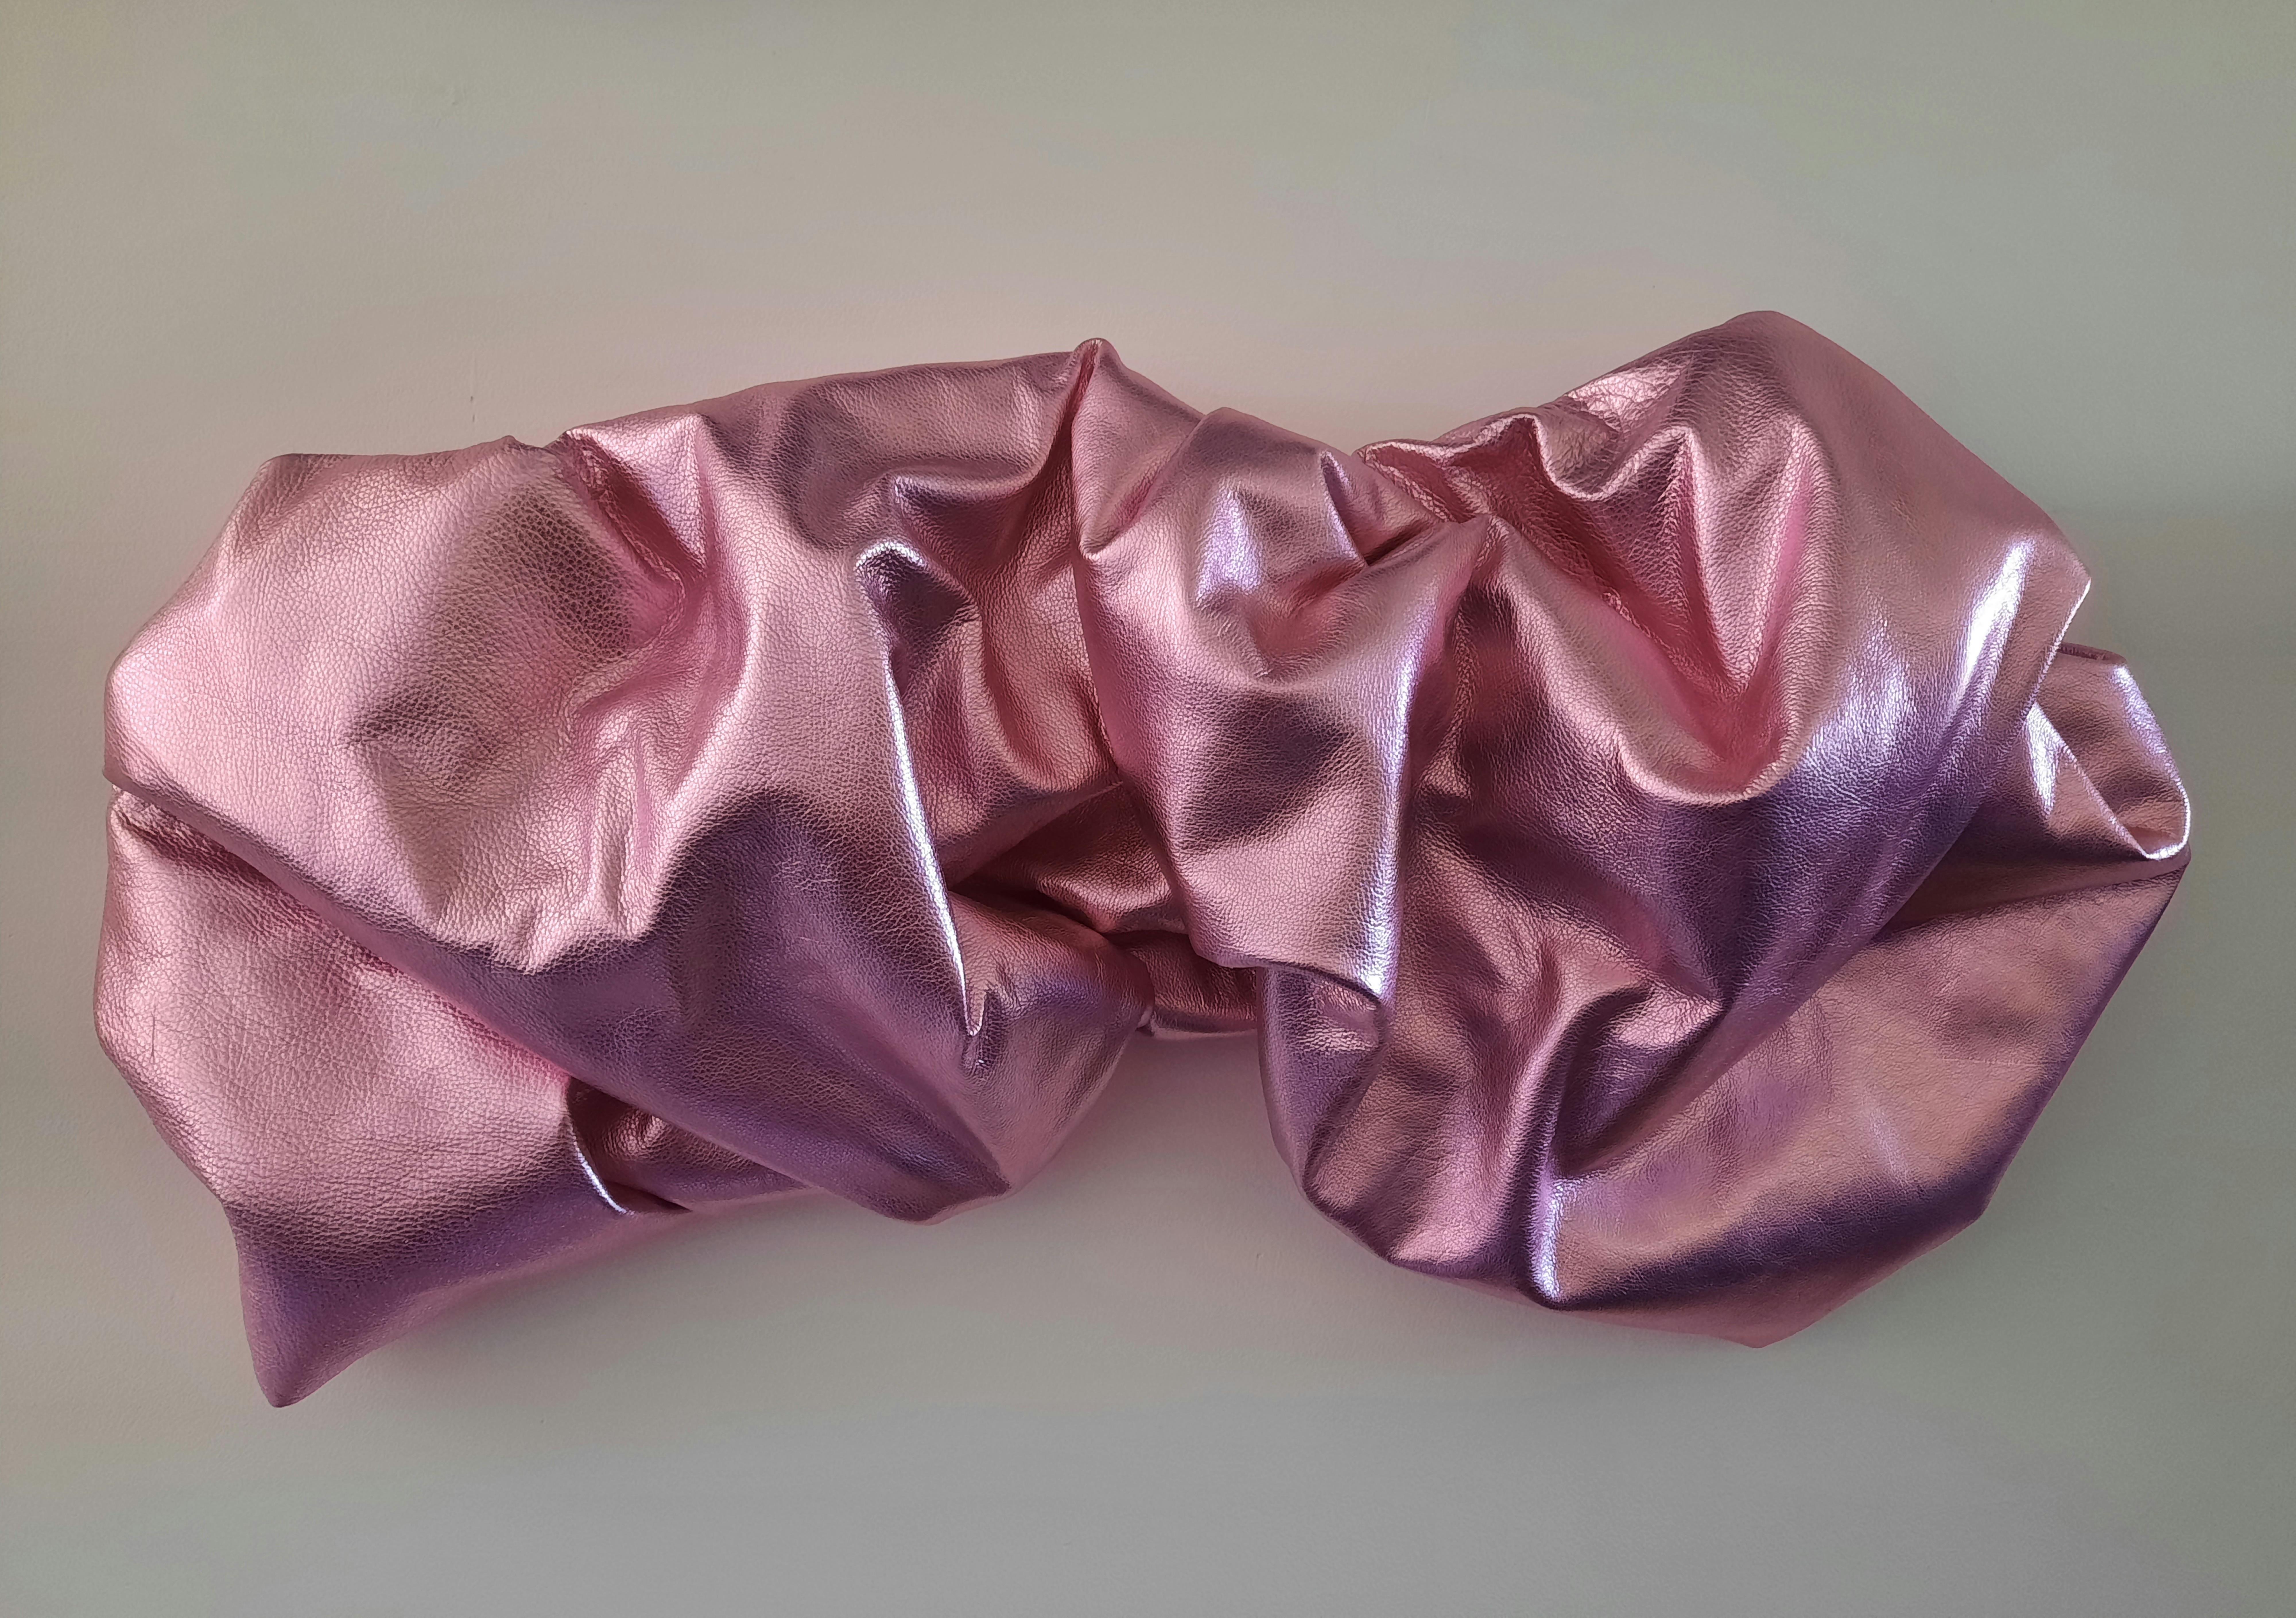 Ted VanCleave Abstract Sculpture - Drape 113 (light pink  folds rose pop slick metallic smooth wall sculpture art)